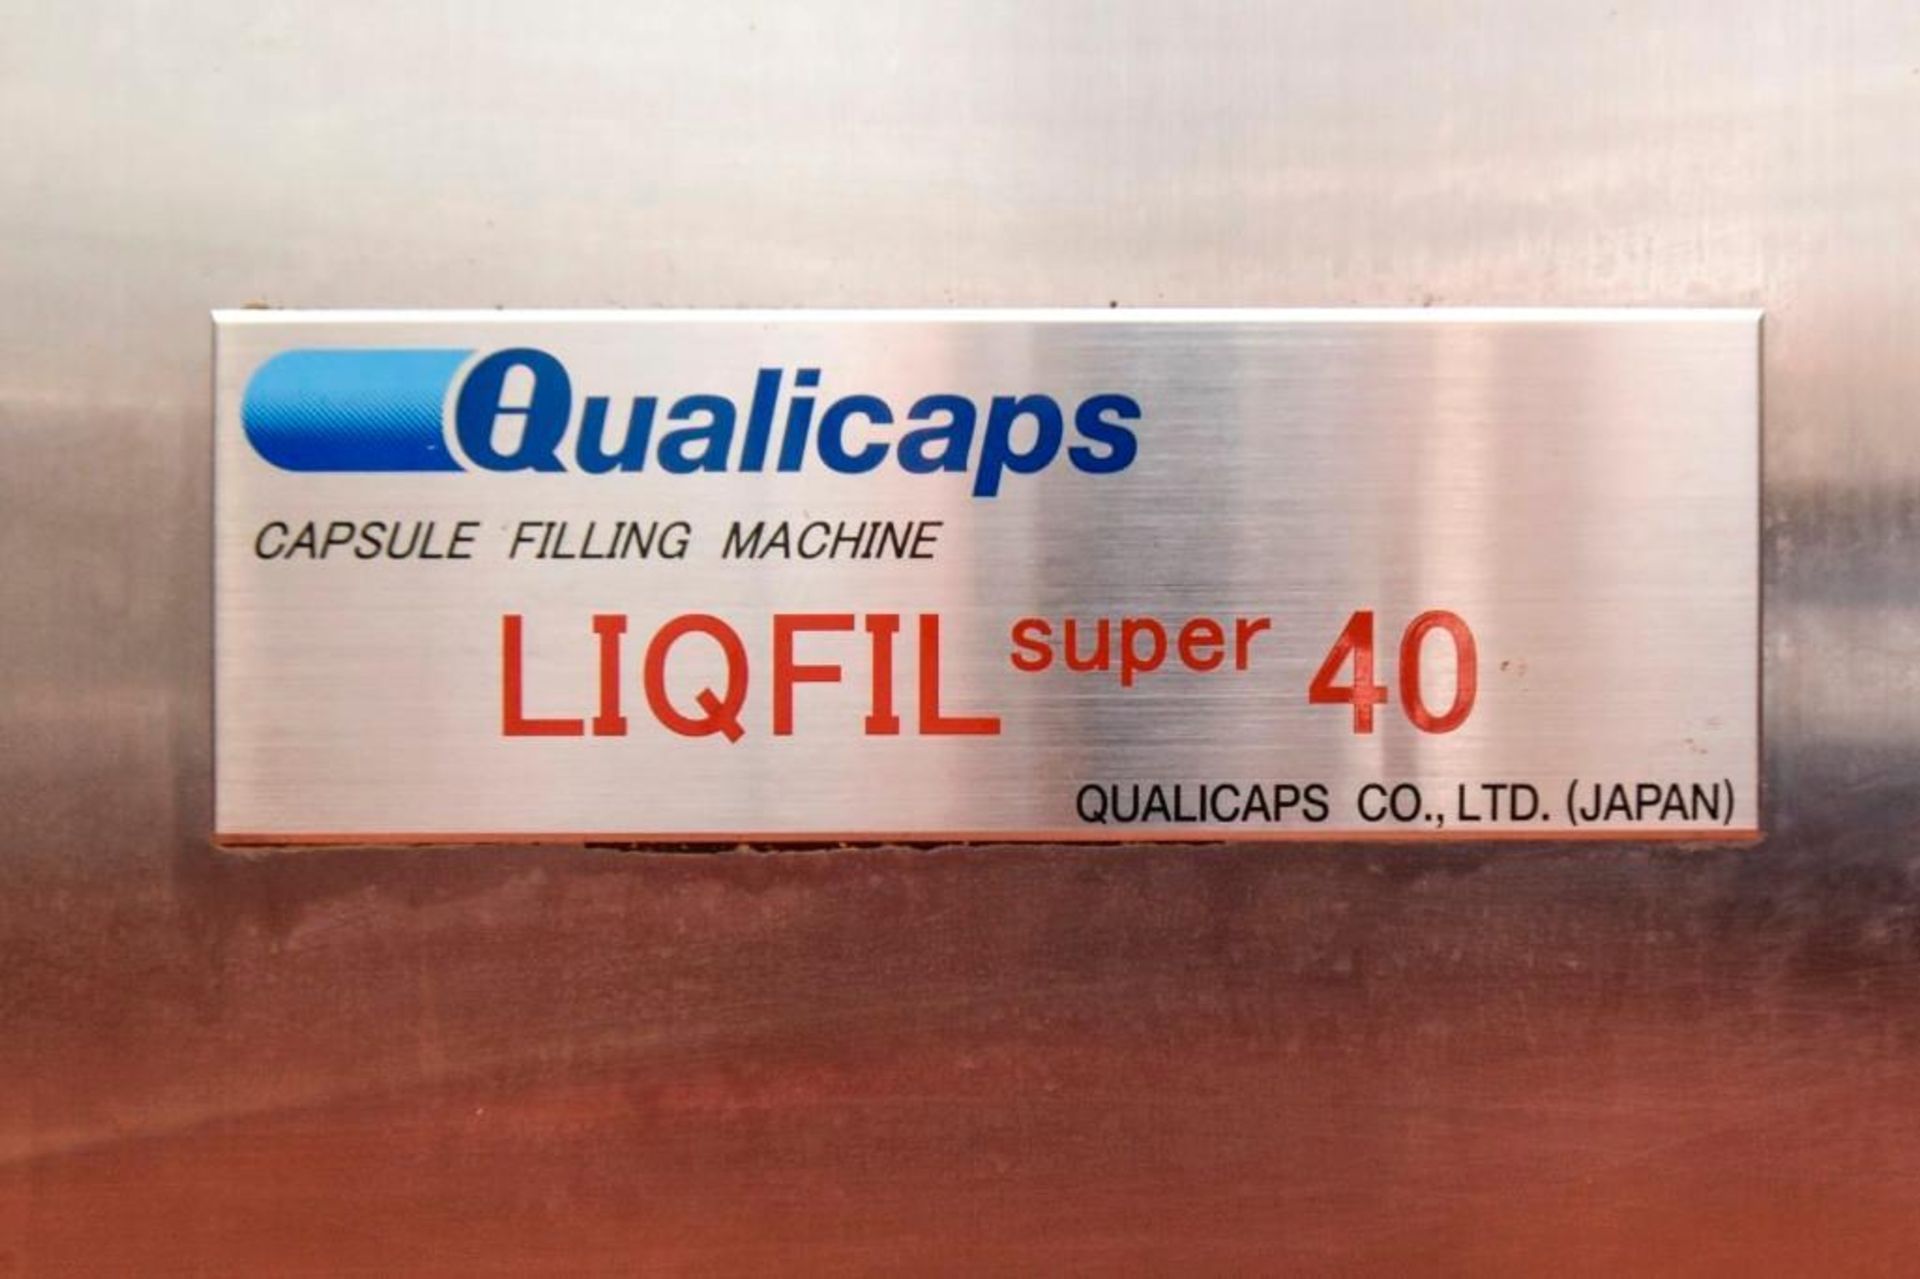 Qualicaps LIQFIL Super 40 Capsule Filling Machine and Spare Parts - Image 4 of 29